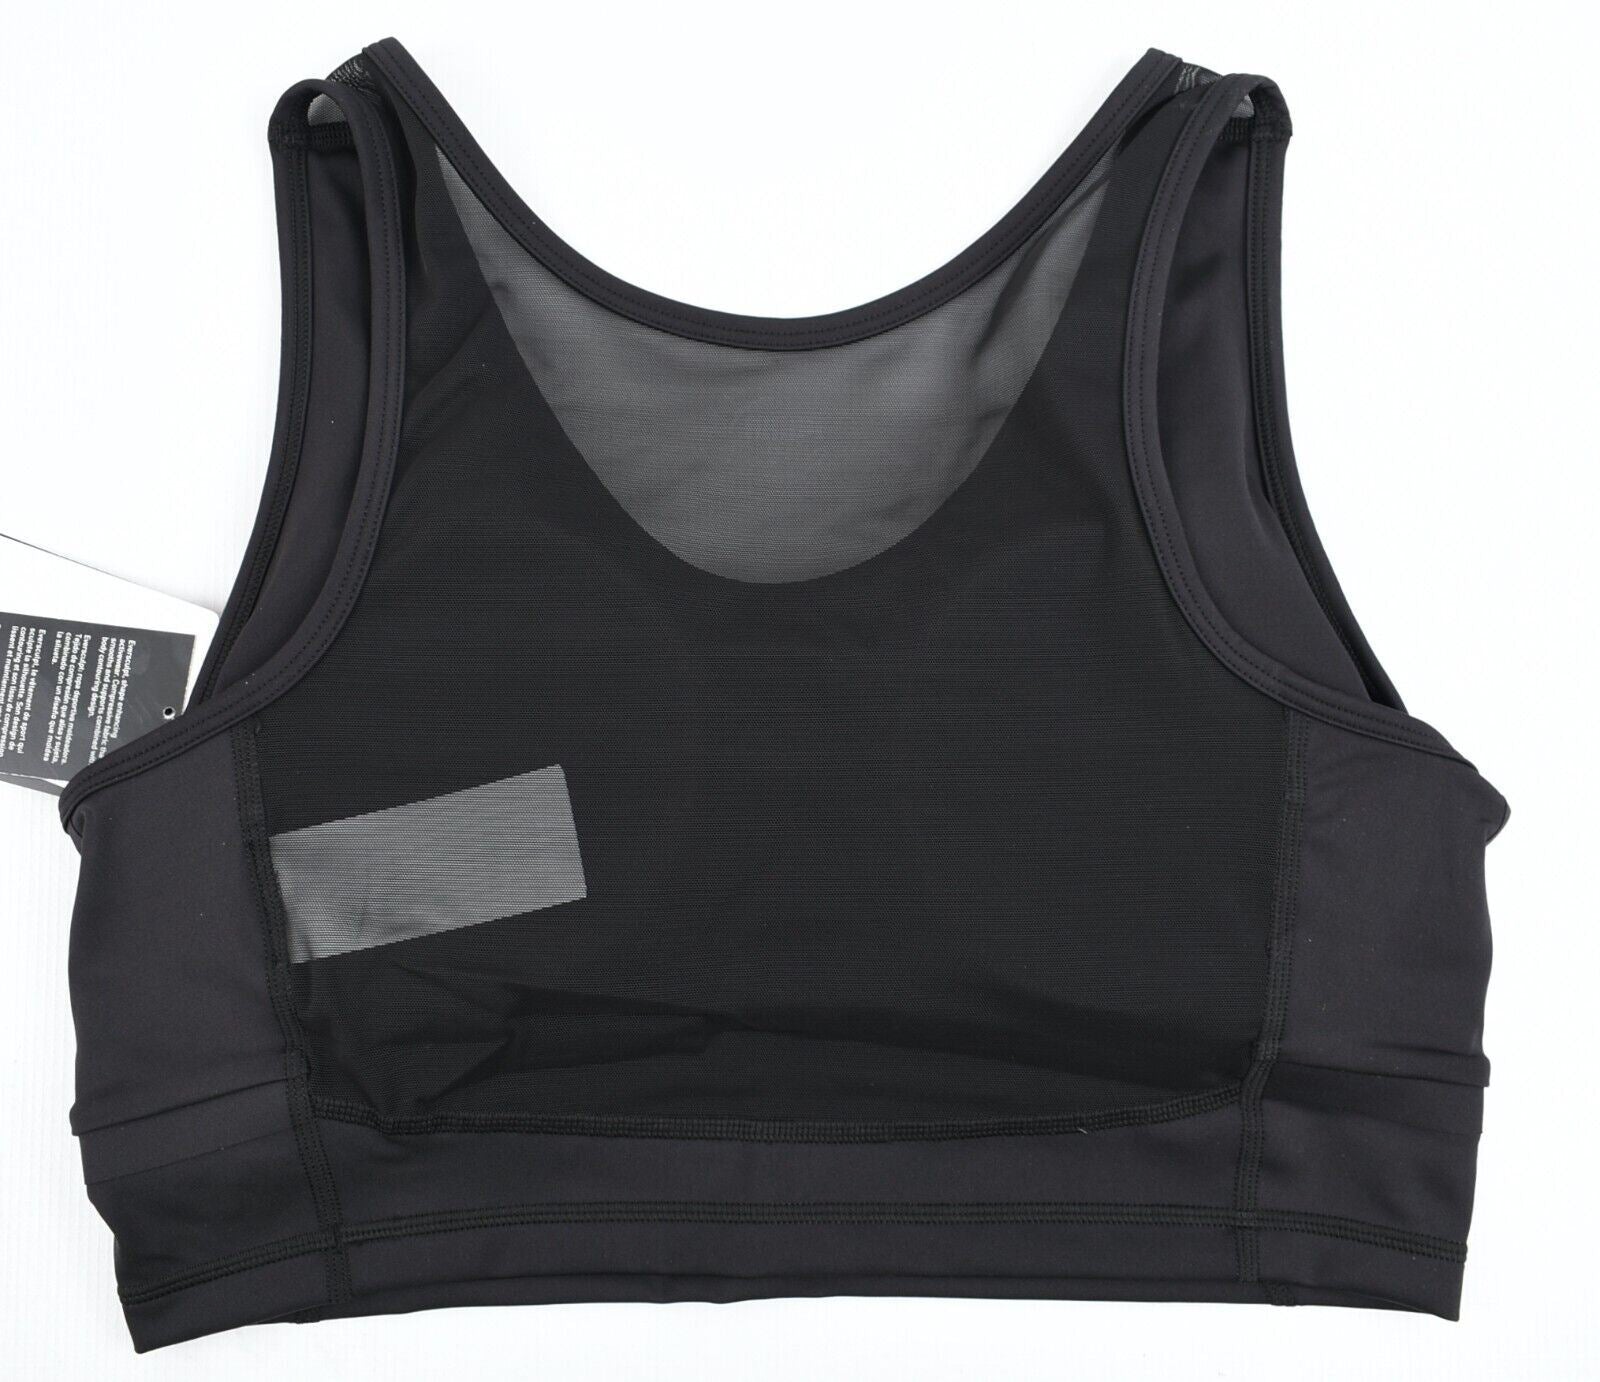 PUMA Women's Activewear: Eversculpt Fitted Crop Top, Black, size L (UK 14)